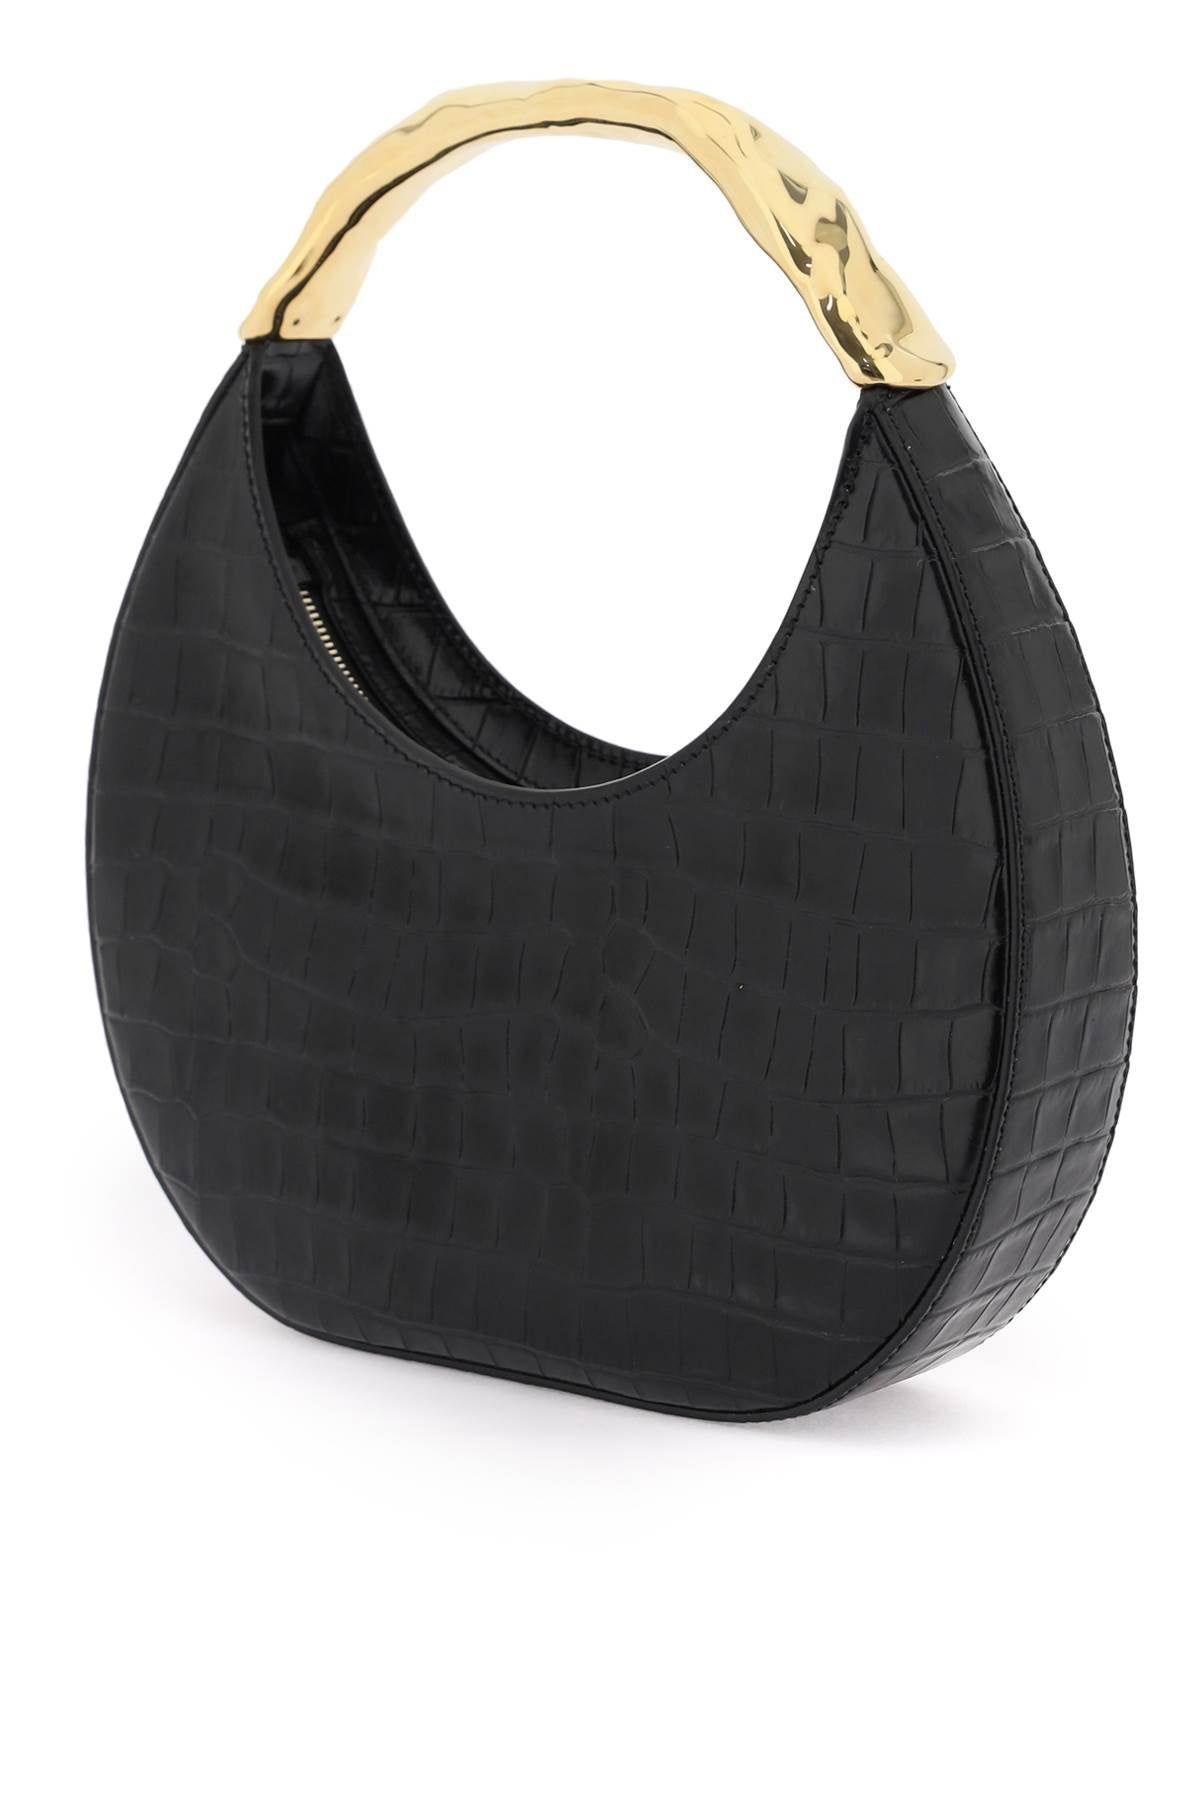 BALLY Black Baroque Croco-Embossed Calf Leather Hobo Handbag for Women